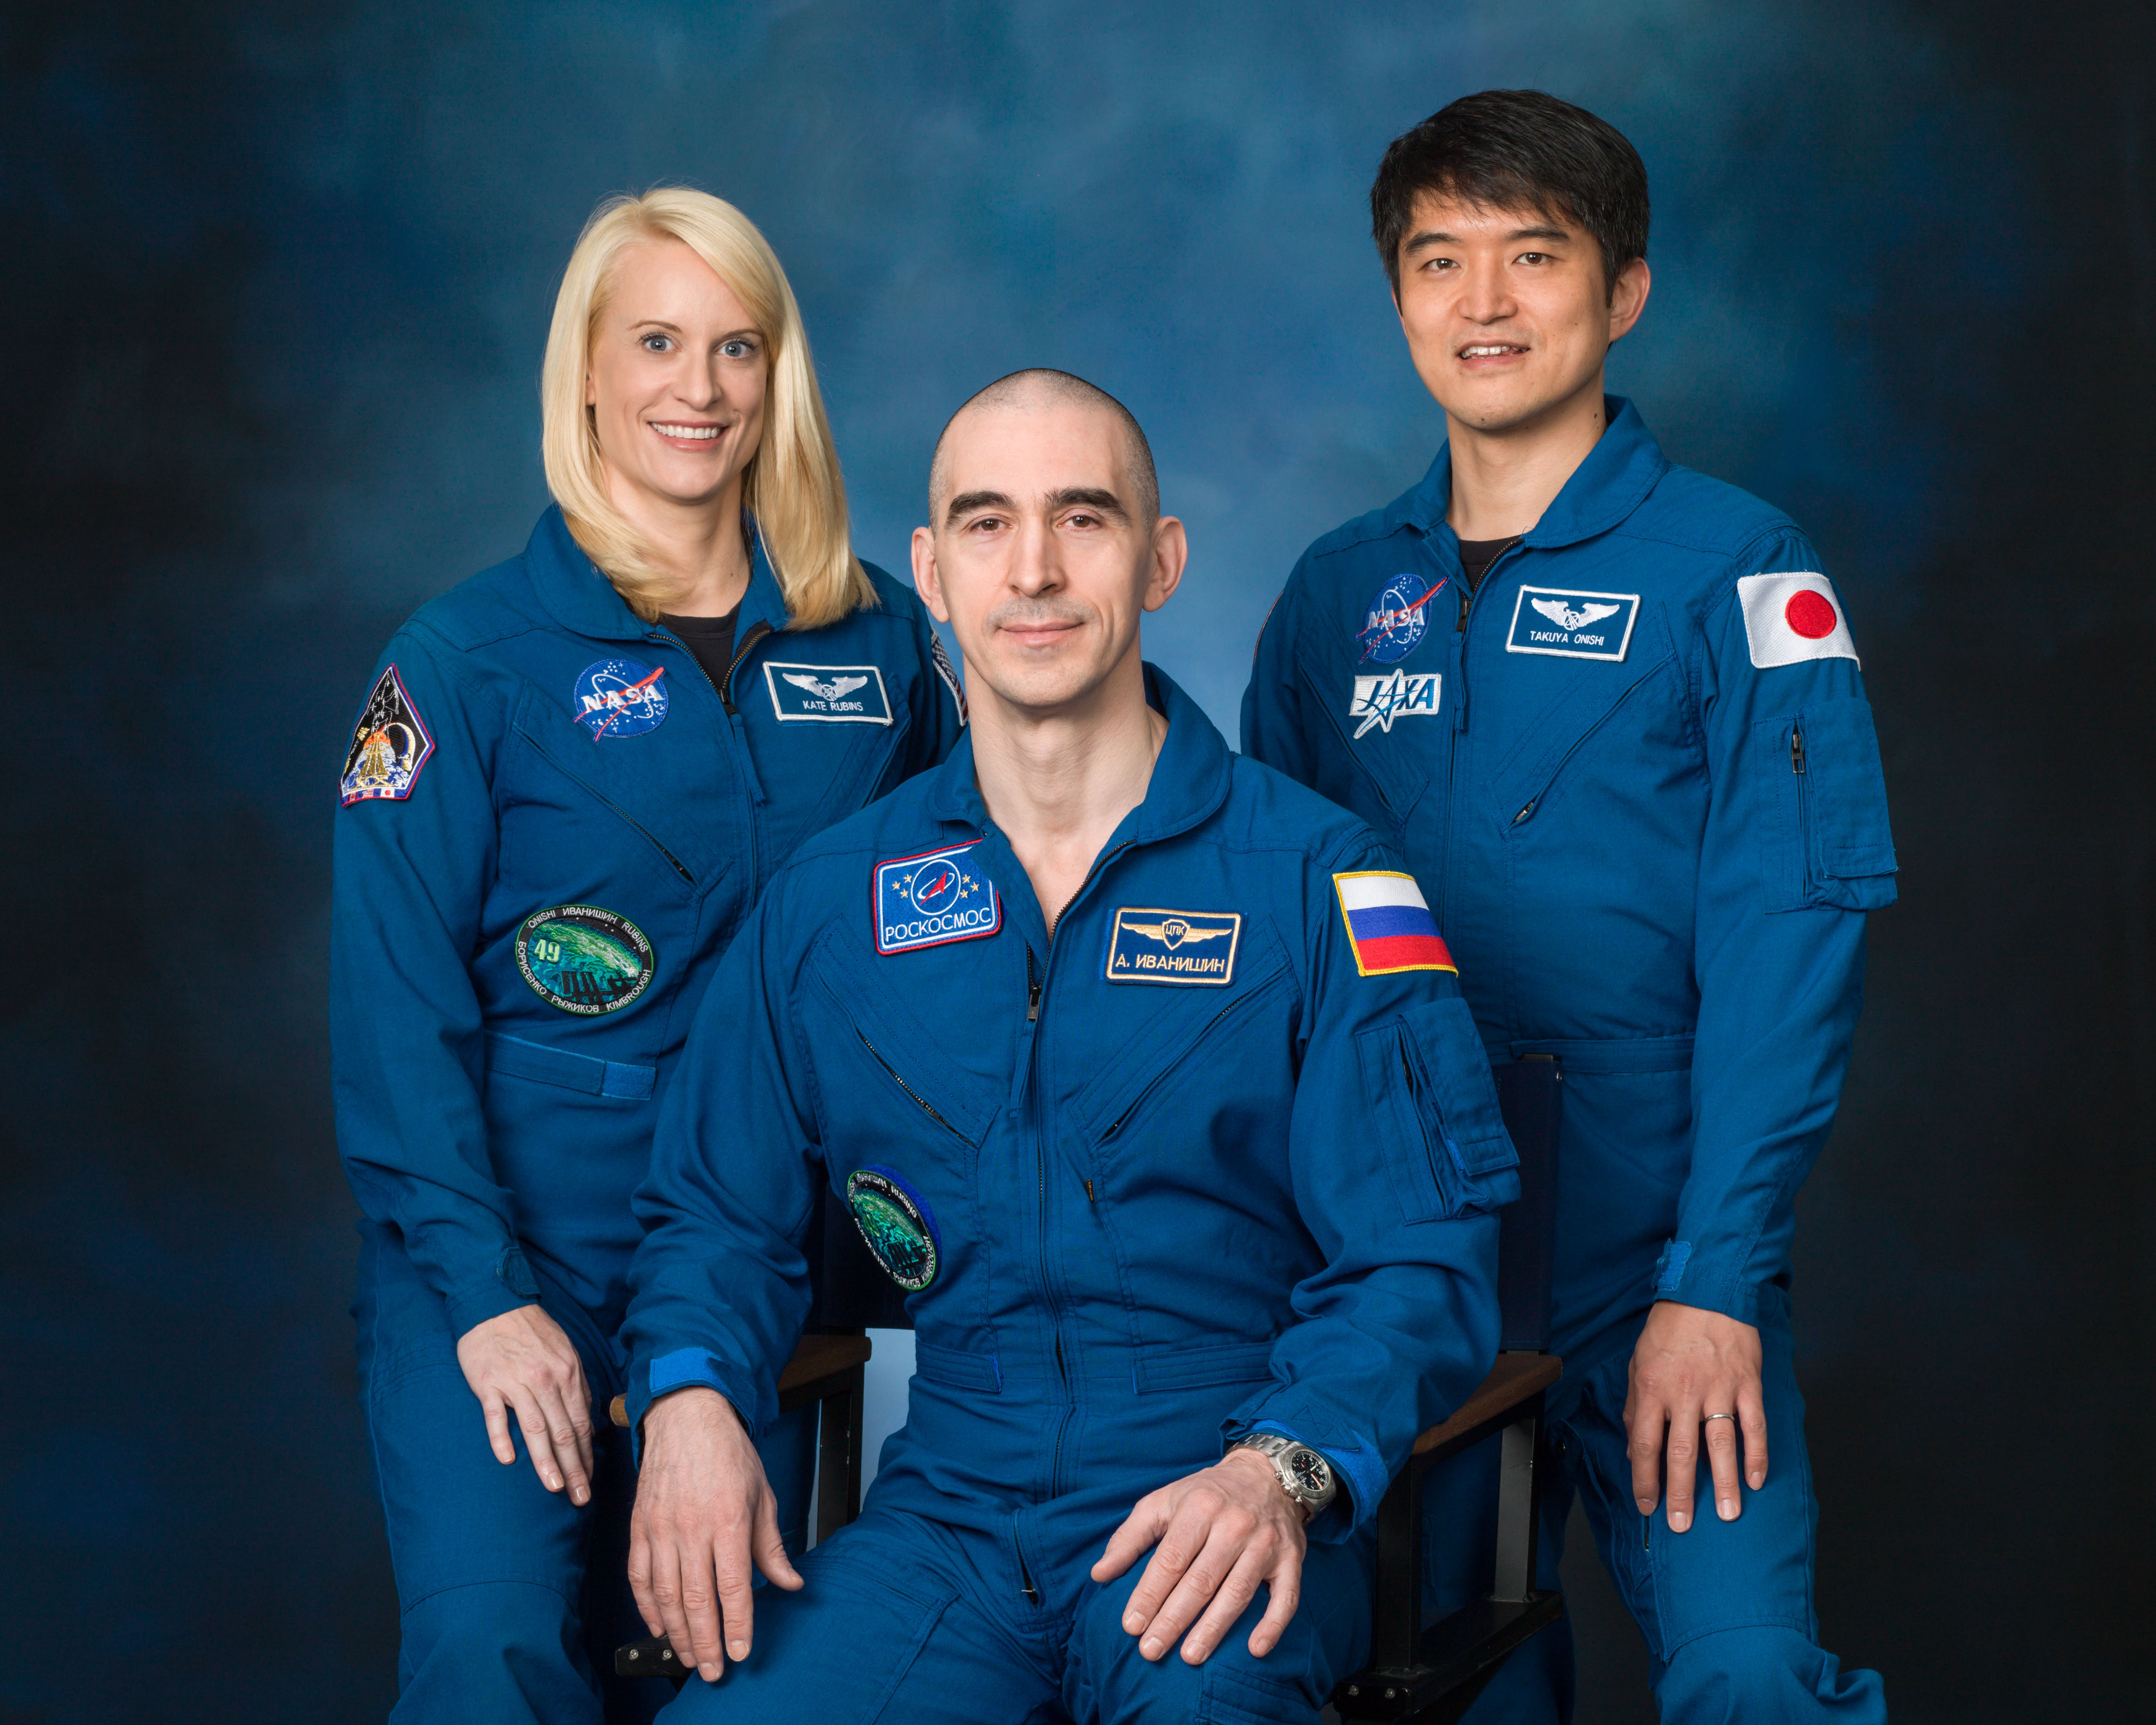 File:Expedition 49 crew portrait with astronaut Rubins, cosmonaut Anatoly Ivanishin, and astronaut Takuya Onishi.jpg - Wikimedia Commons